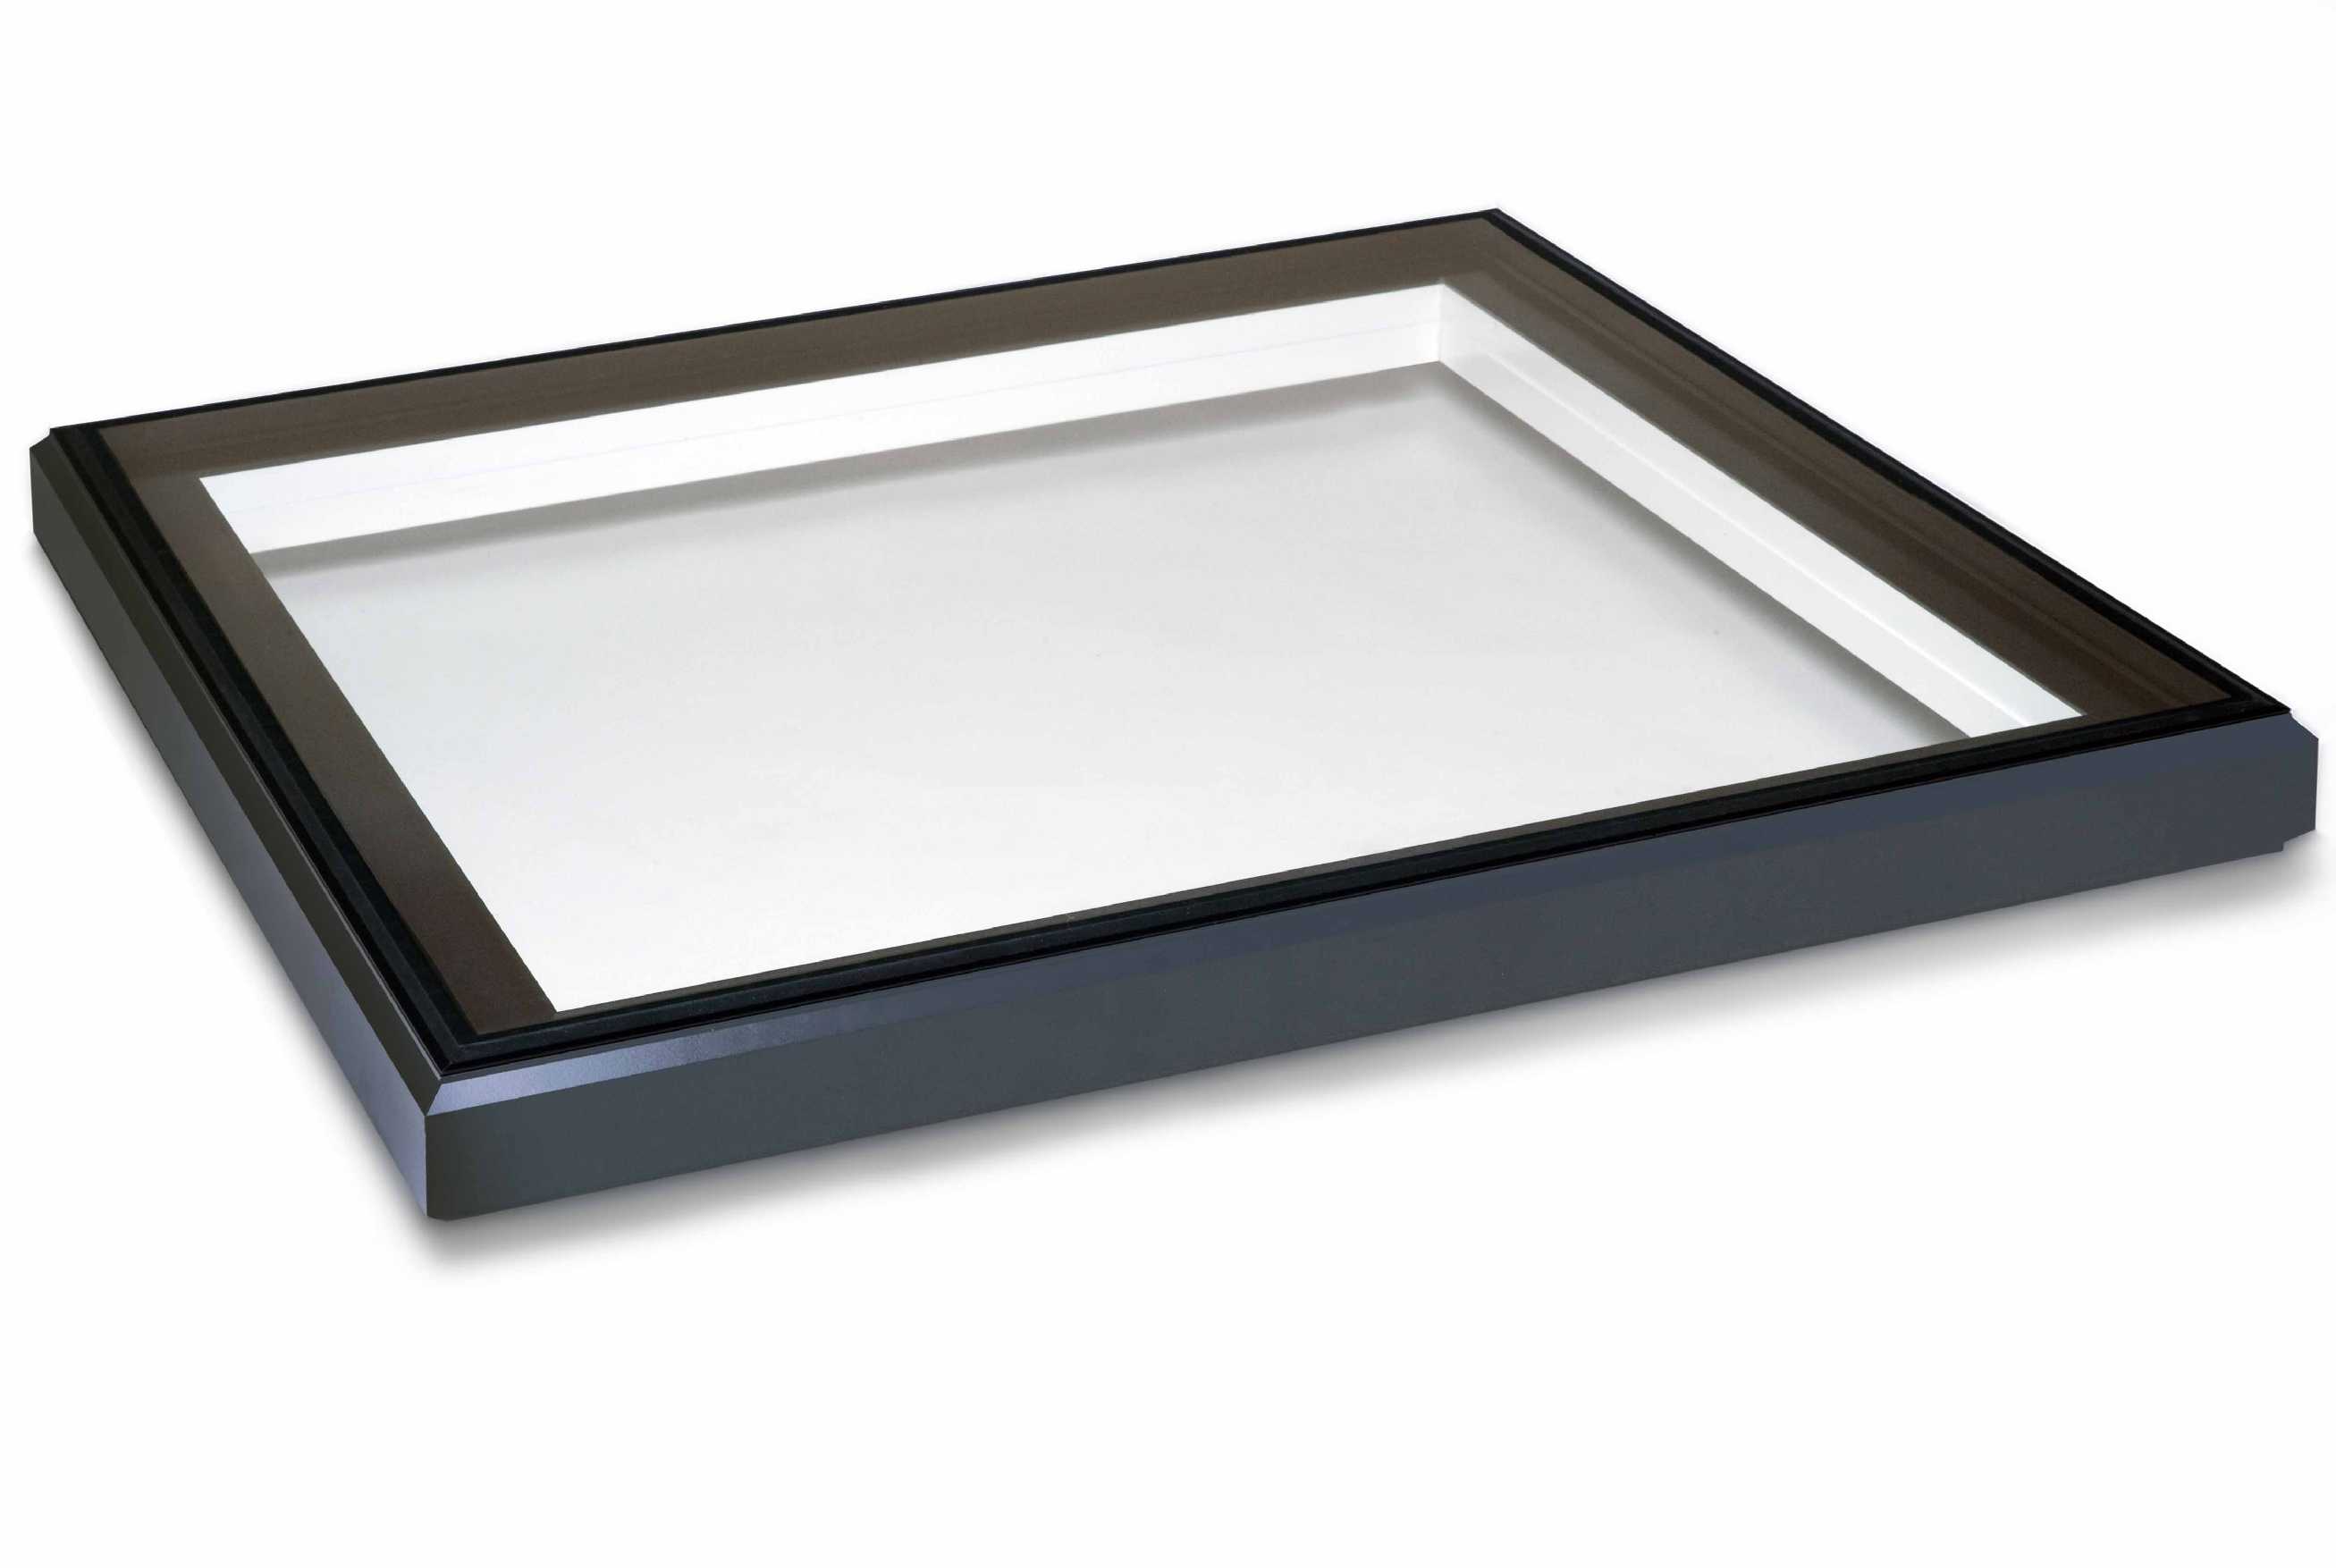 Buy EcoGard Flat Roof light, Triple Glazed, Fixed, 1,000mm x 1,500mm online today